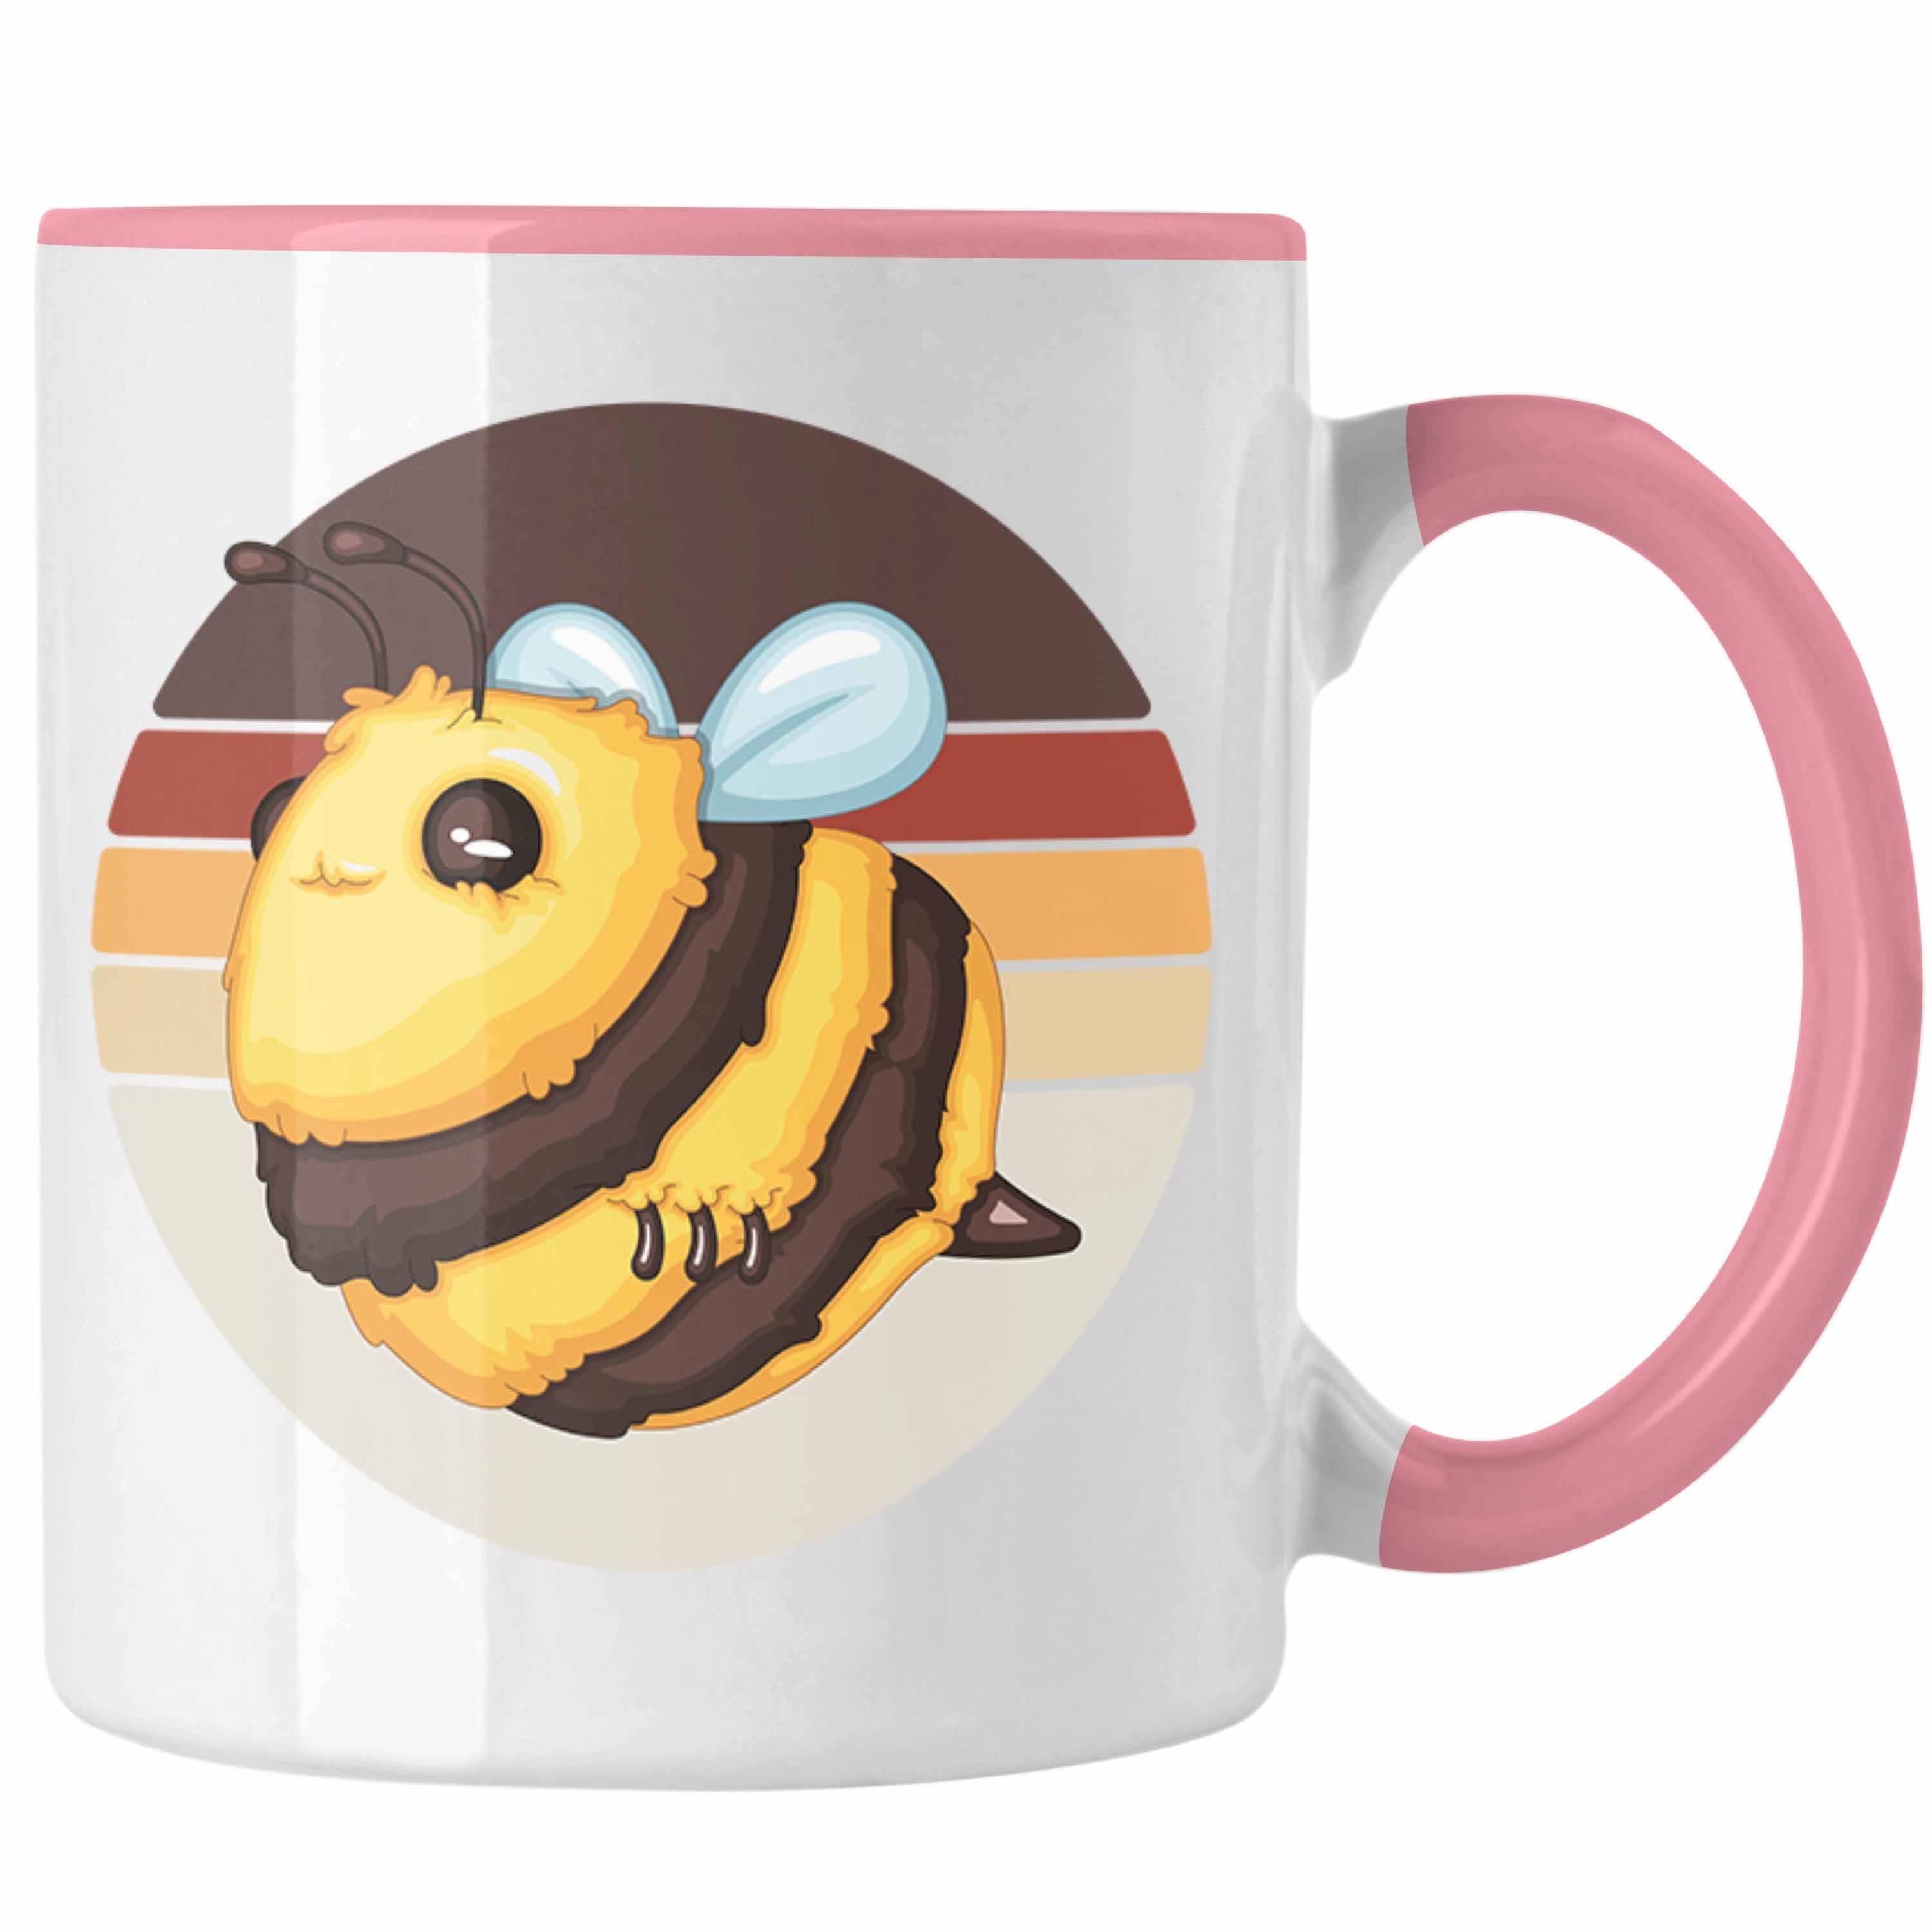 Züchter Trendation Imker Hummel Tasse Bienen Grafik Tasse Geschenkidee Geschenk Rosa